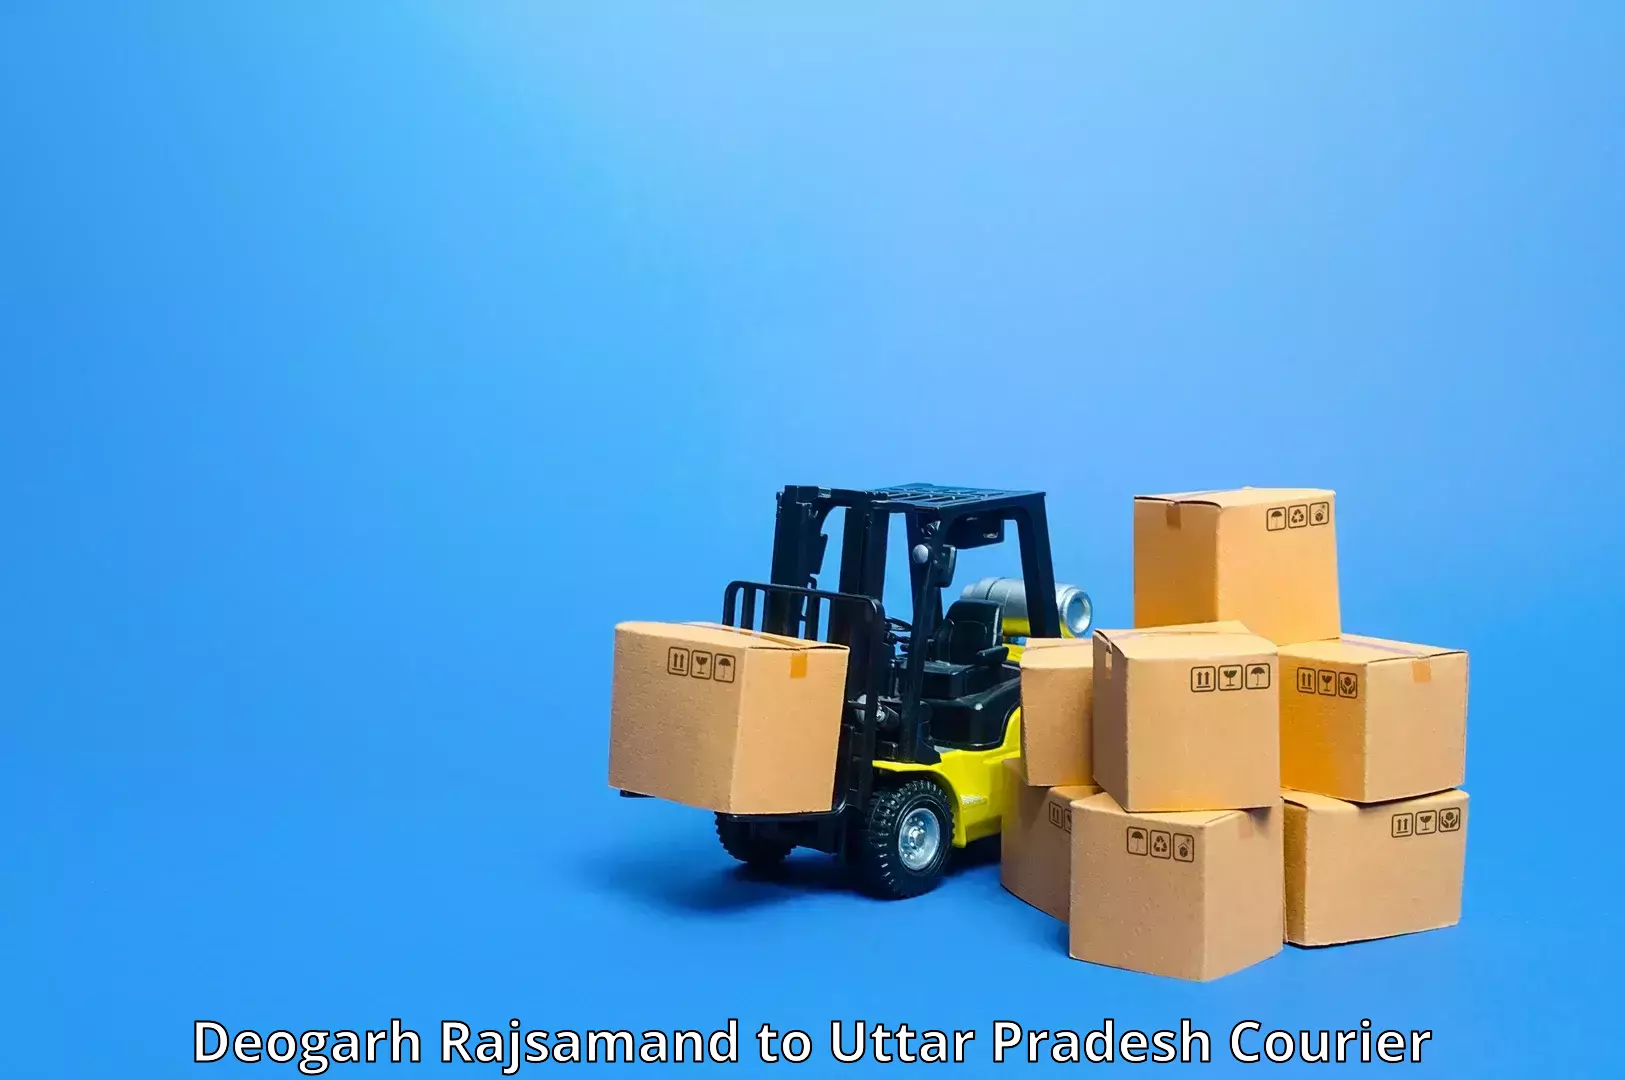 Global logistics network Deogarh Rajsamand to Bijnor